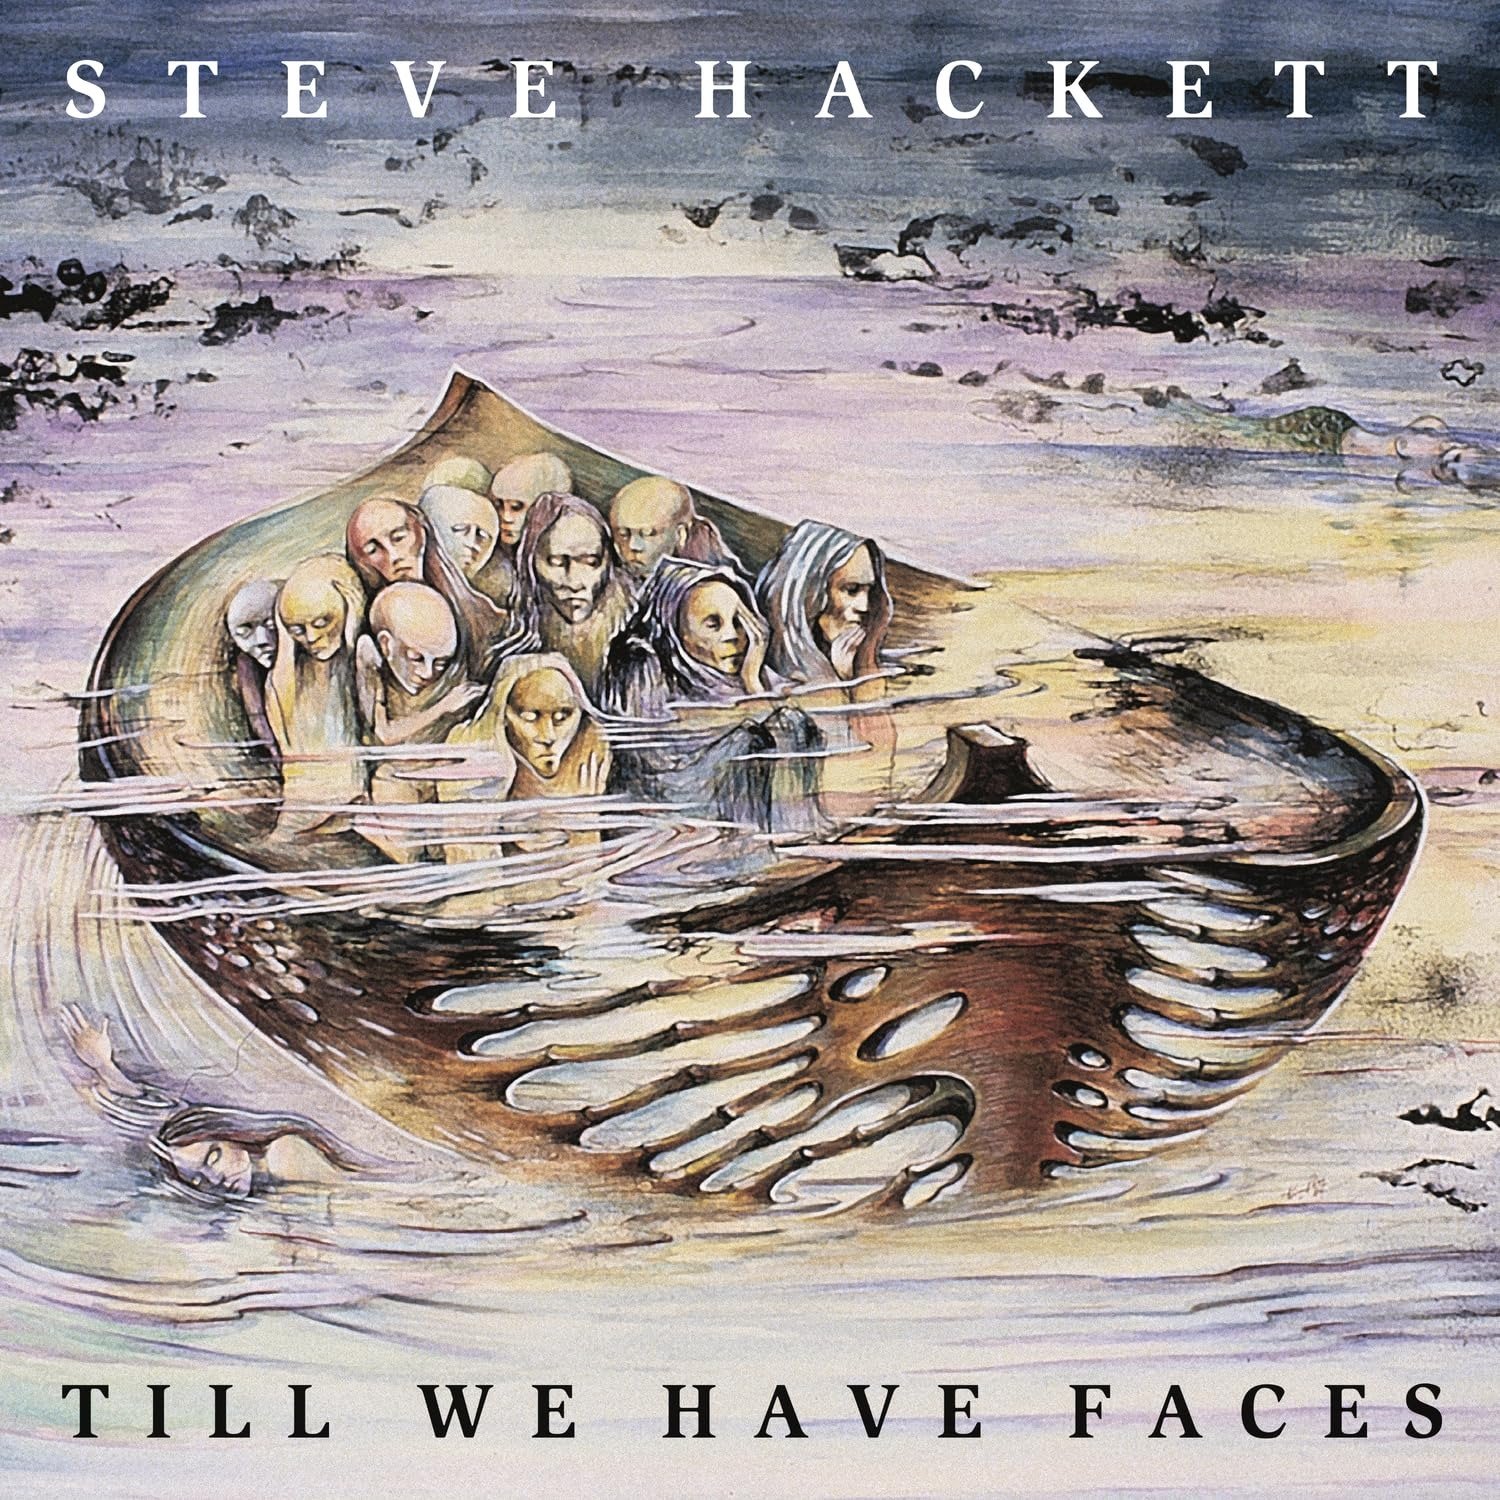 CD Shop - HACKETT, STEVE TILL WE HAVE FACES